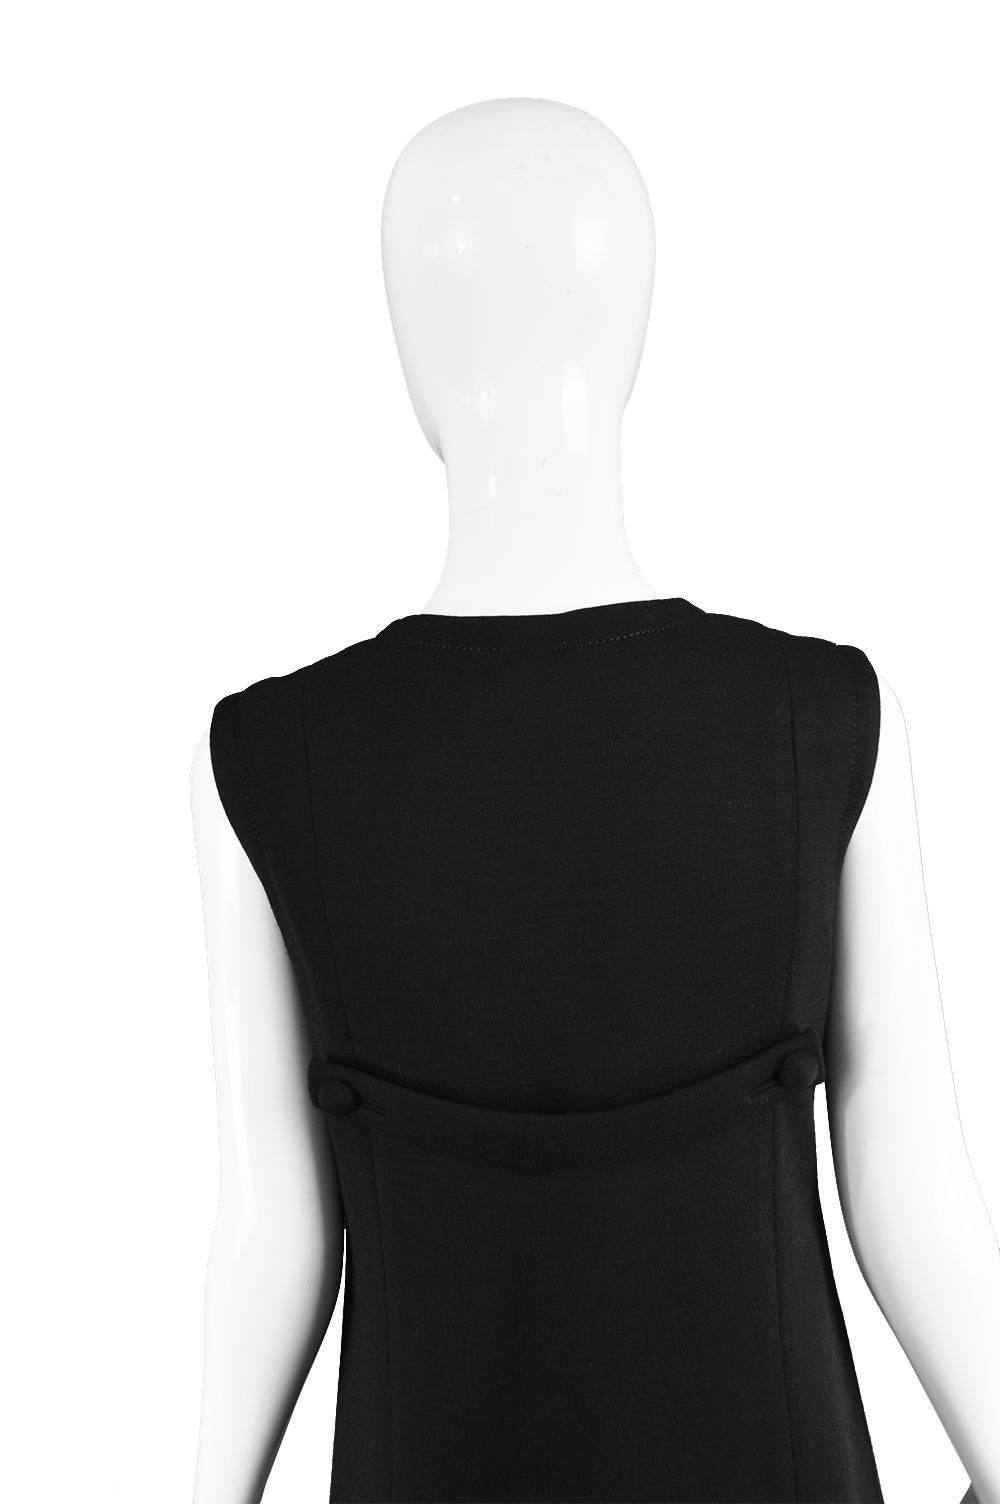 Jean Patou Vintage 1960s Black Wool Sleeveless Mod Minimalist Shift Dress  For Sale 4